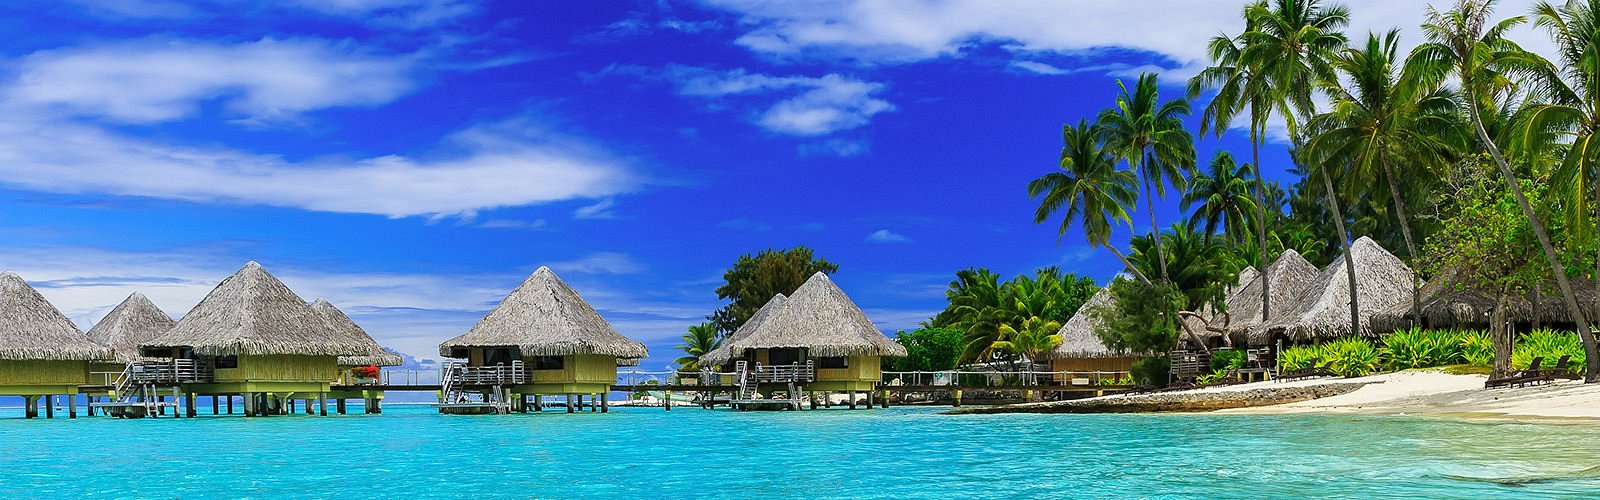 THE 10 BEST Hotels in Bora Bora for 2023 (from $105) - Tripadvisor